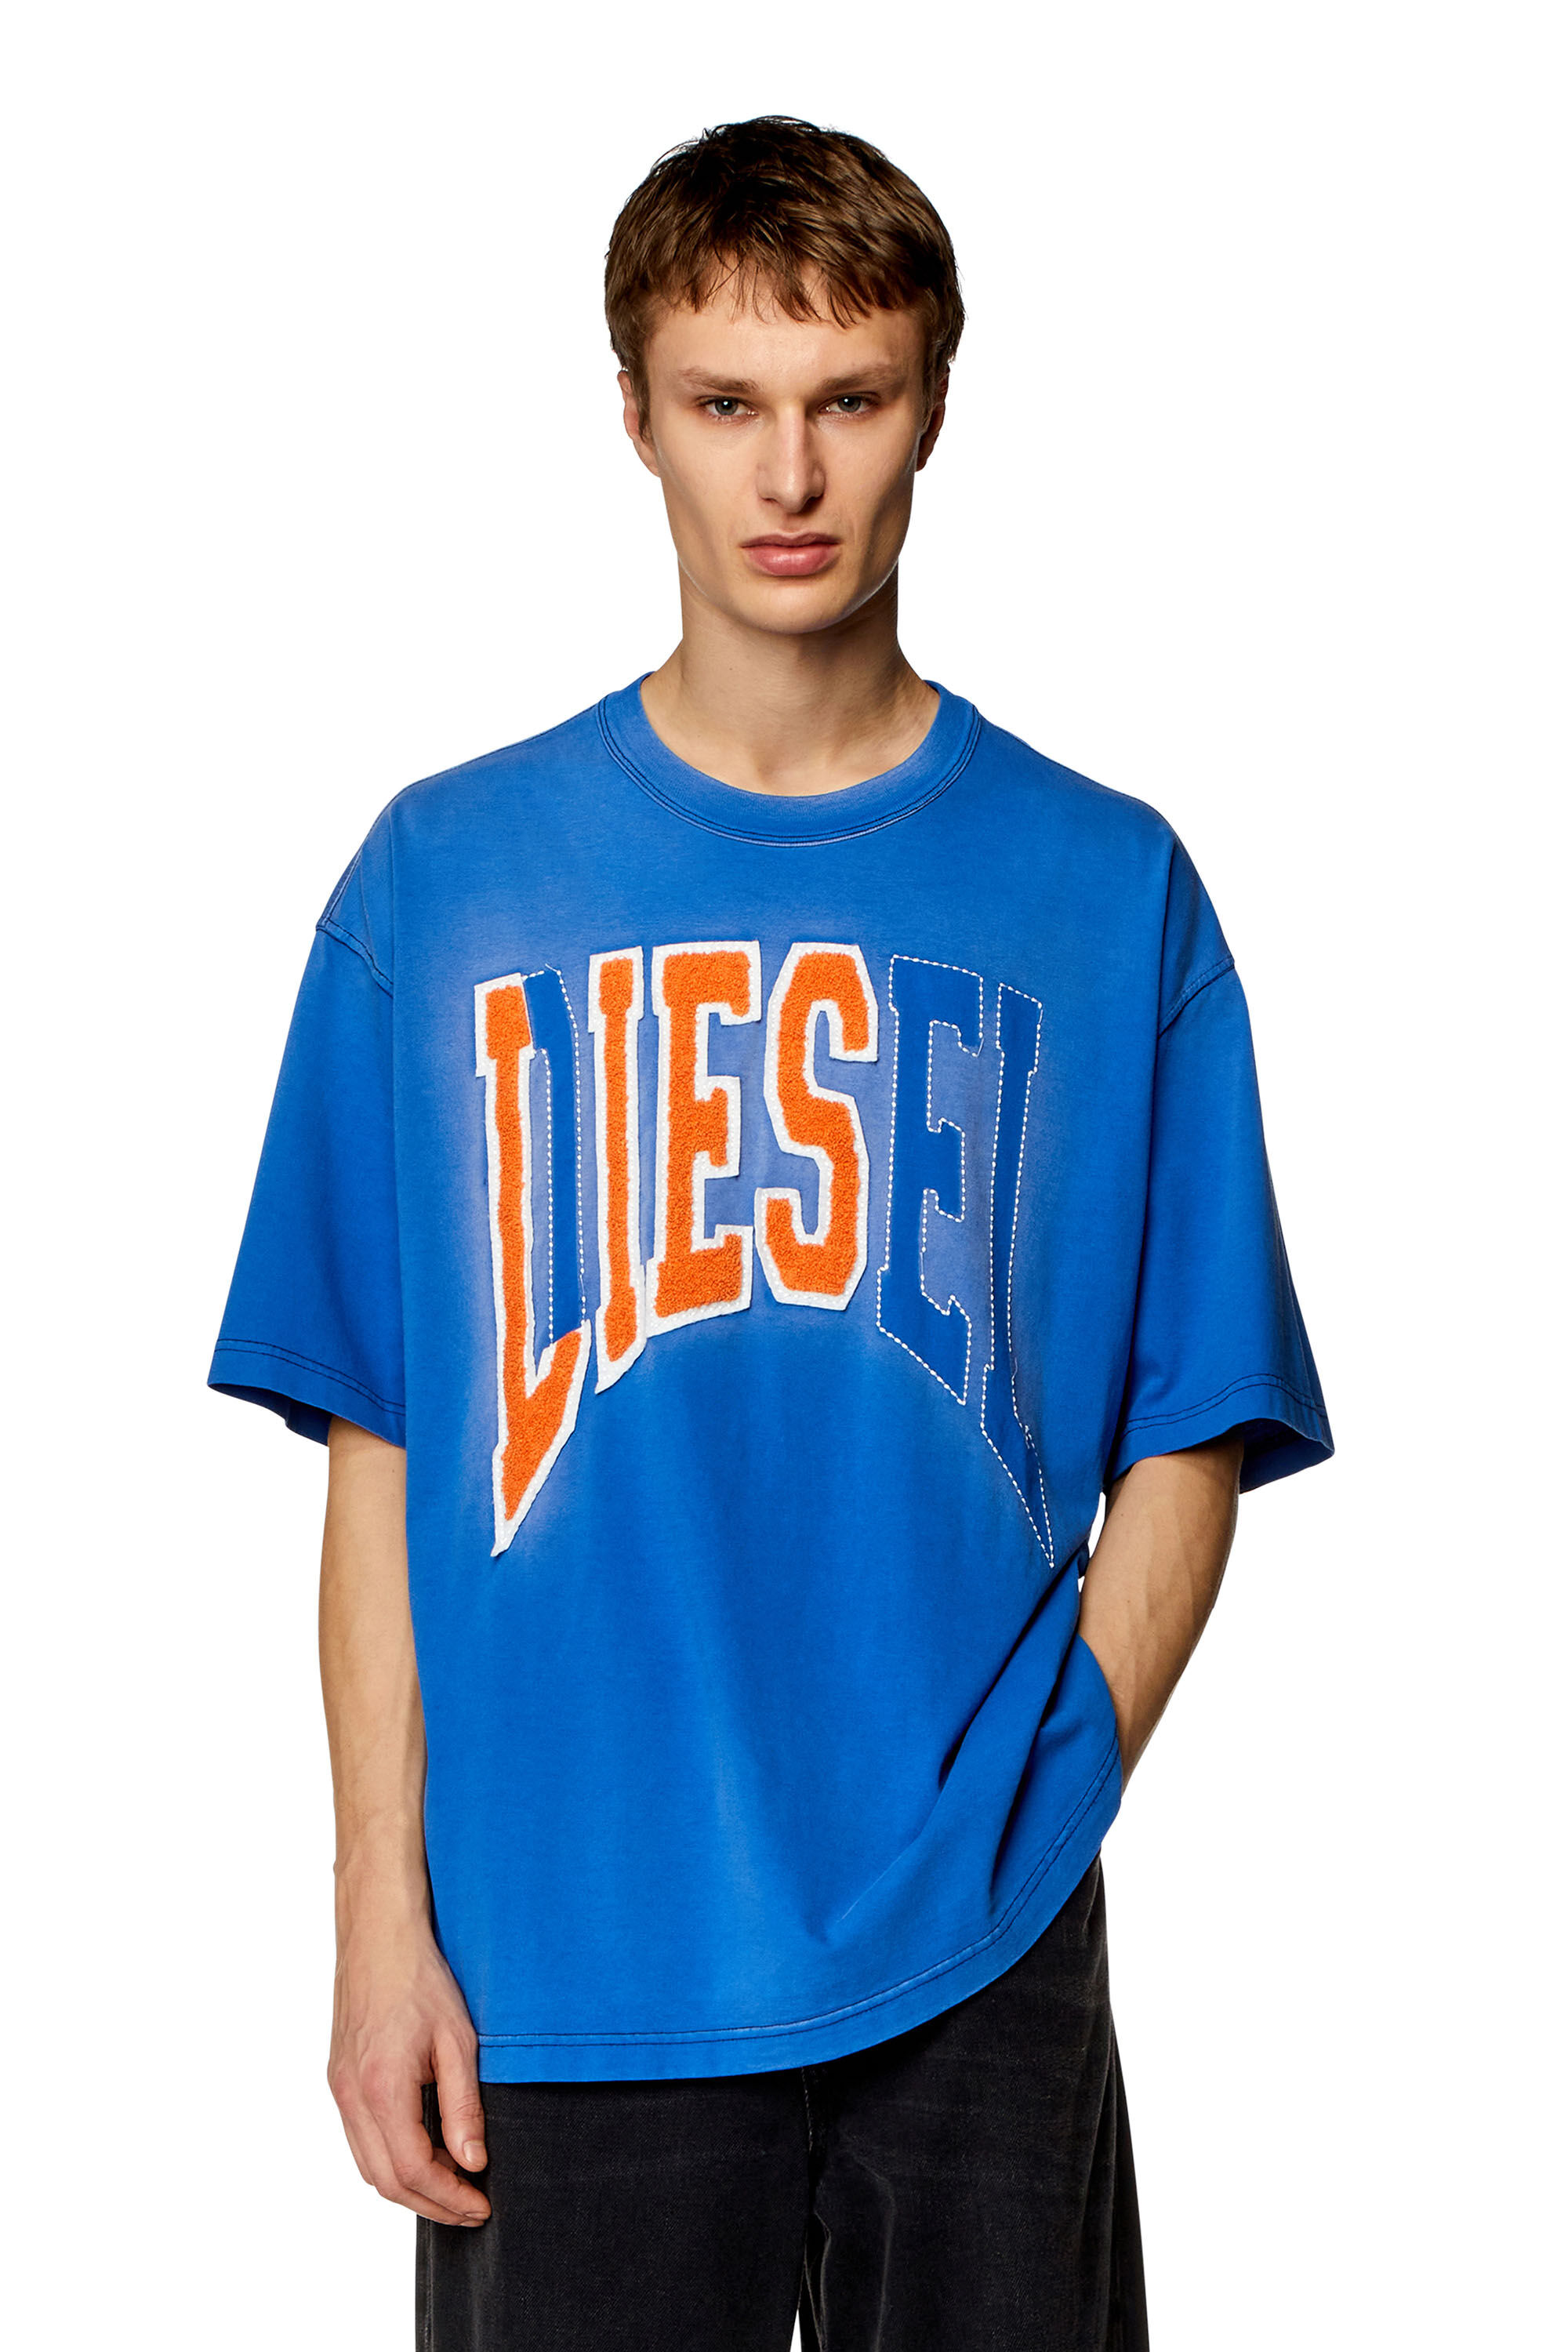 Diesel - T-WASH-N, Male Oversized T-shirt with Diesel Lies logo in Blue - Image 3